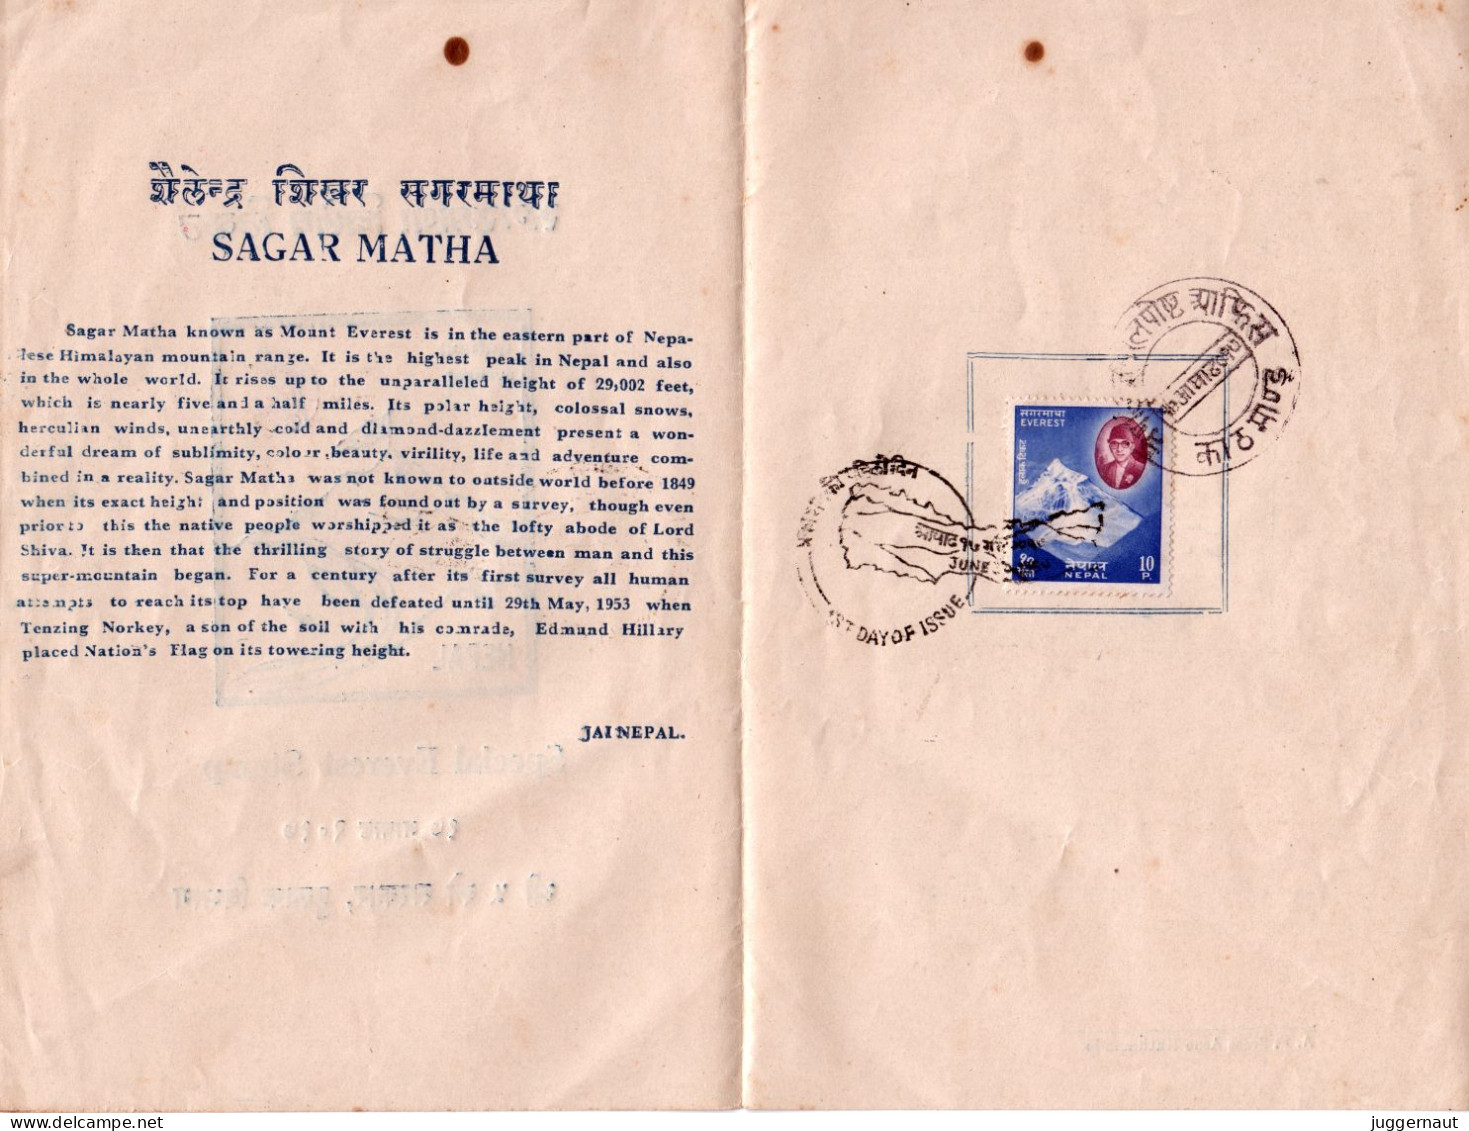 Mt. Everest Postage Stamp Folder FDC 1960 Nepal - Berge